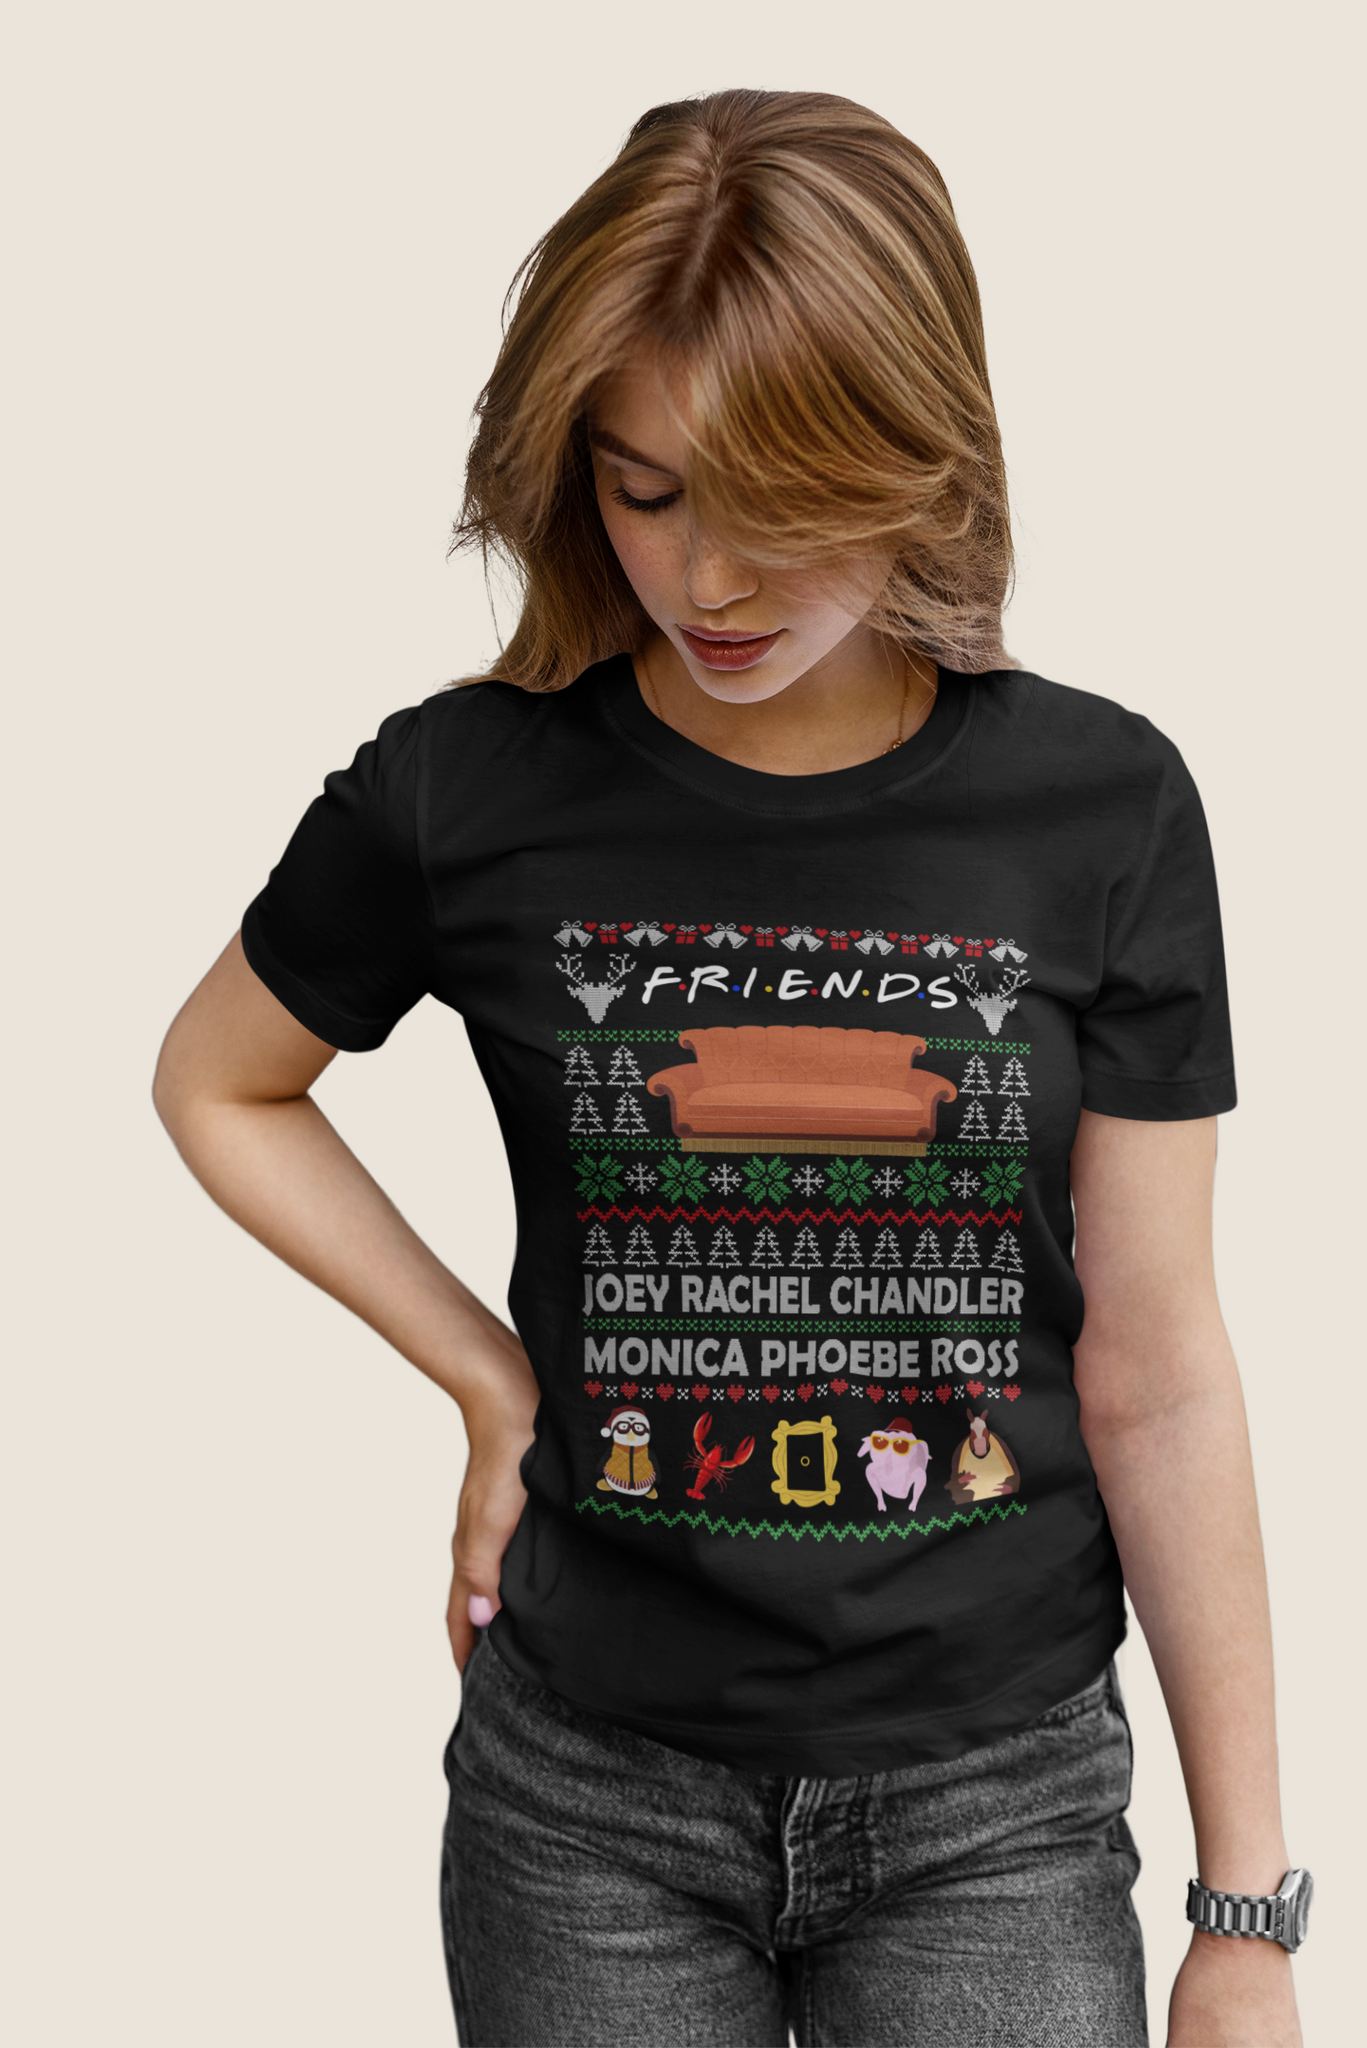 Friends TV Show Ugly Sweater T Shirt, Joey Rachel Chandler Monica Phoebe Ross Tshirt, Christmas Gifts